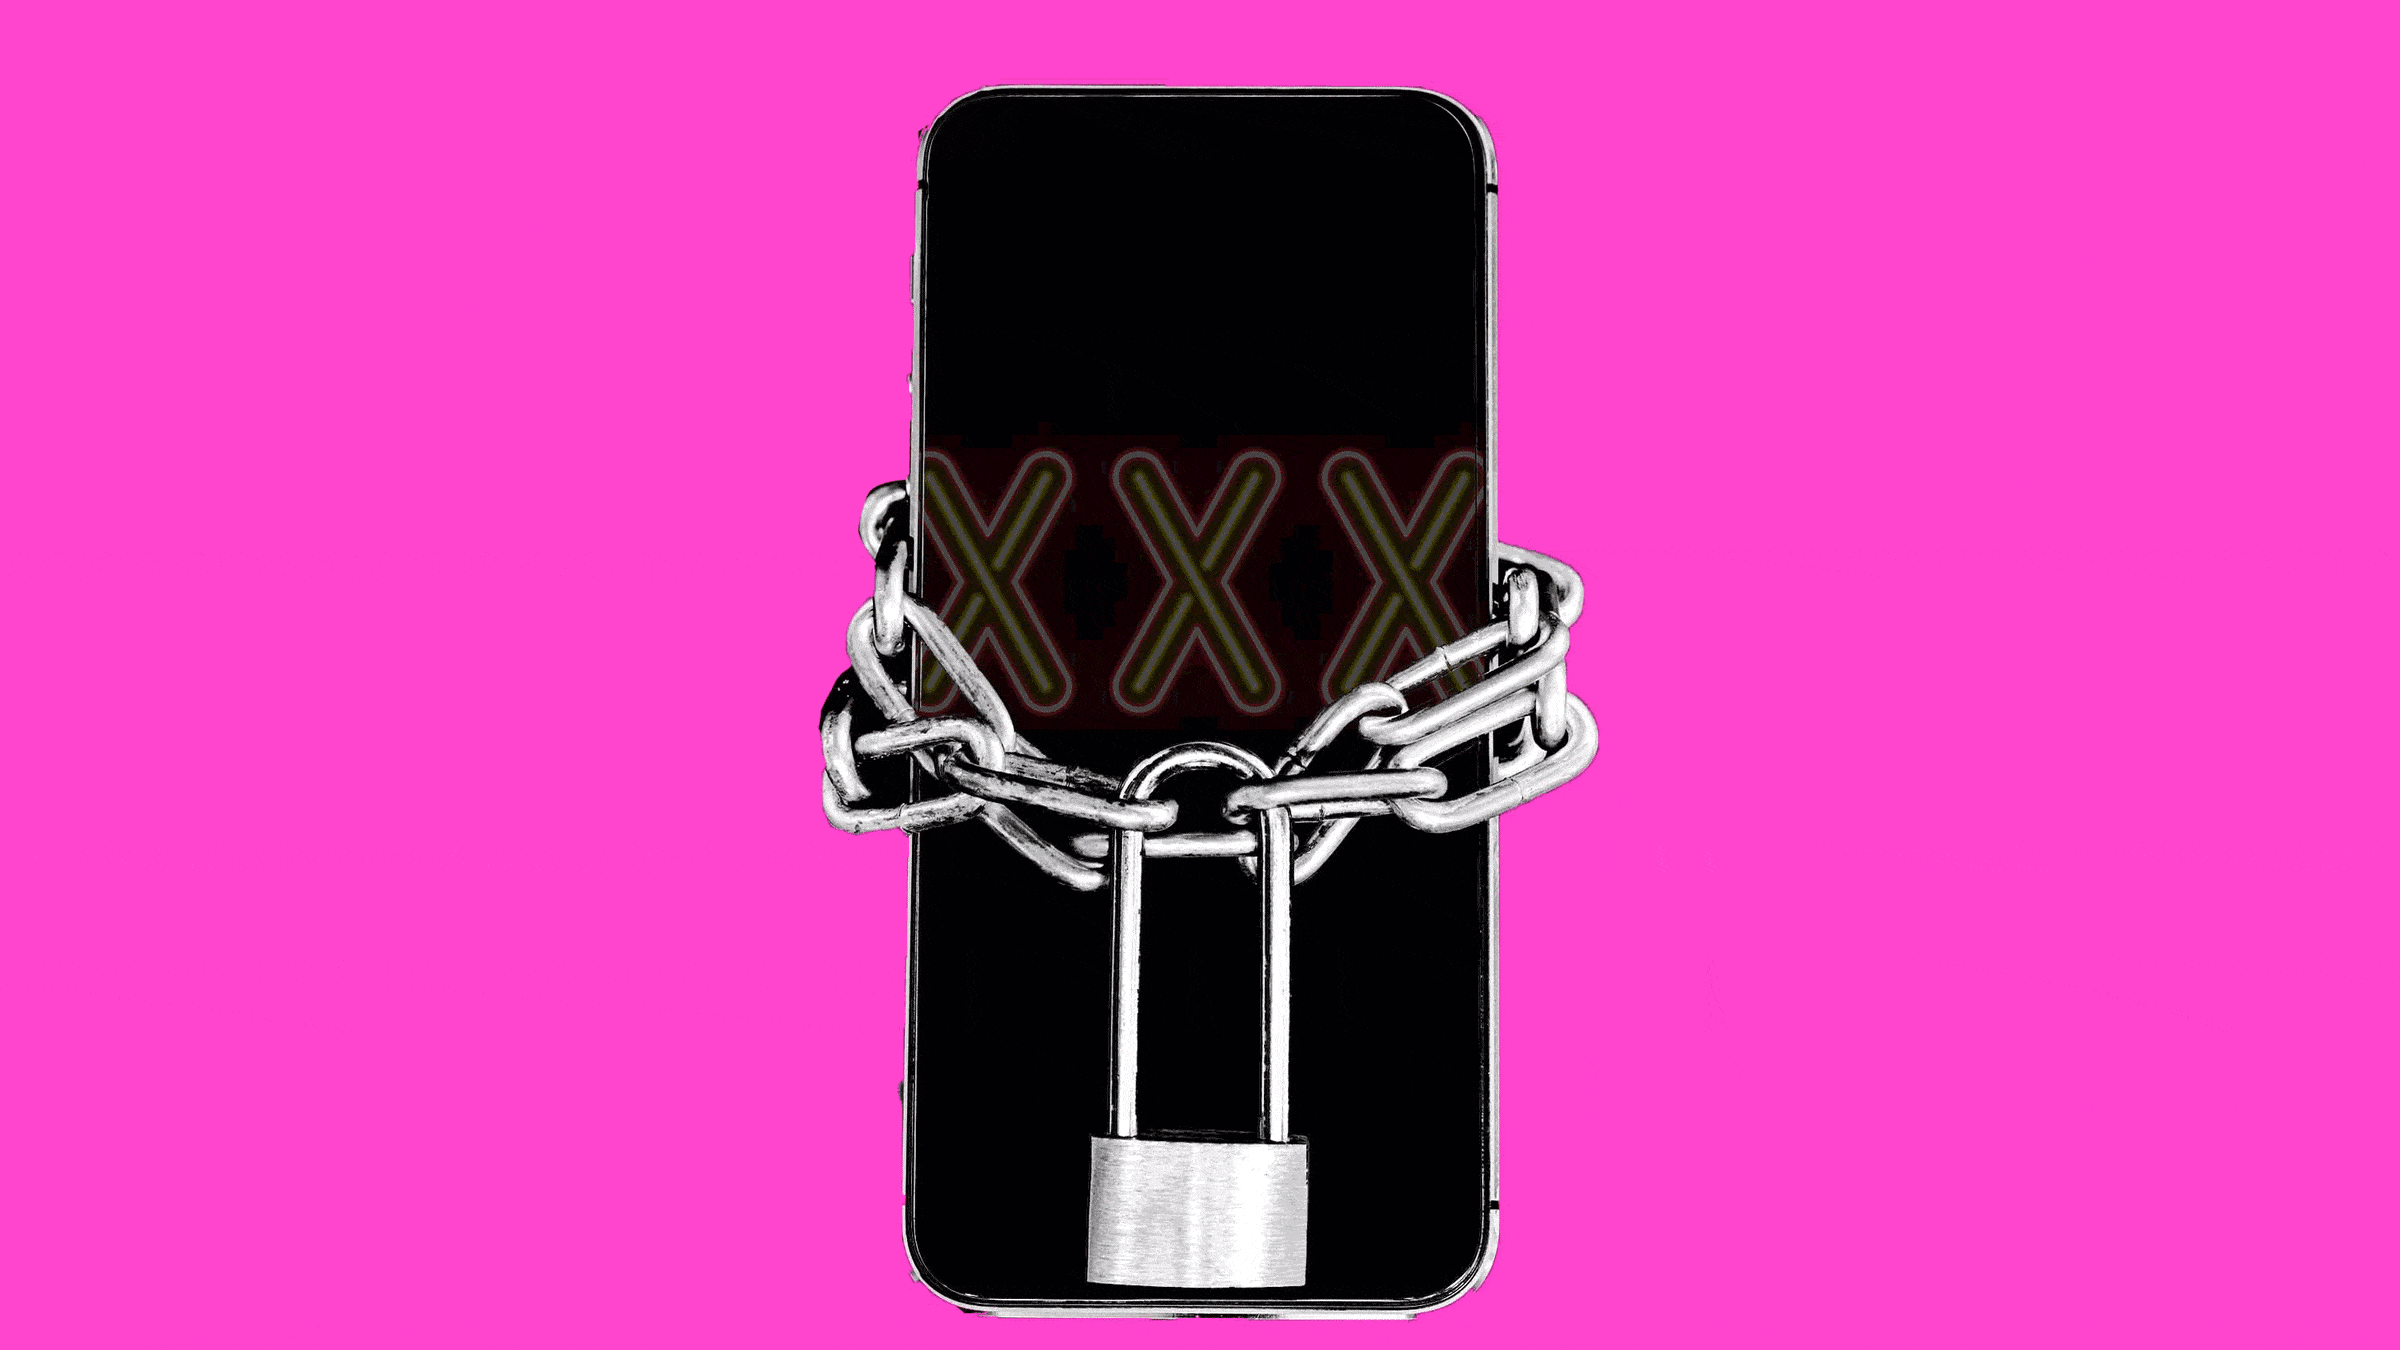 Xxx Ban - A Porn Star's Open Letter to Utah Republicans on Their XXX Cellphone Ban